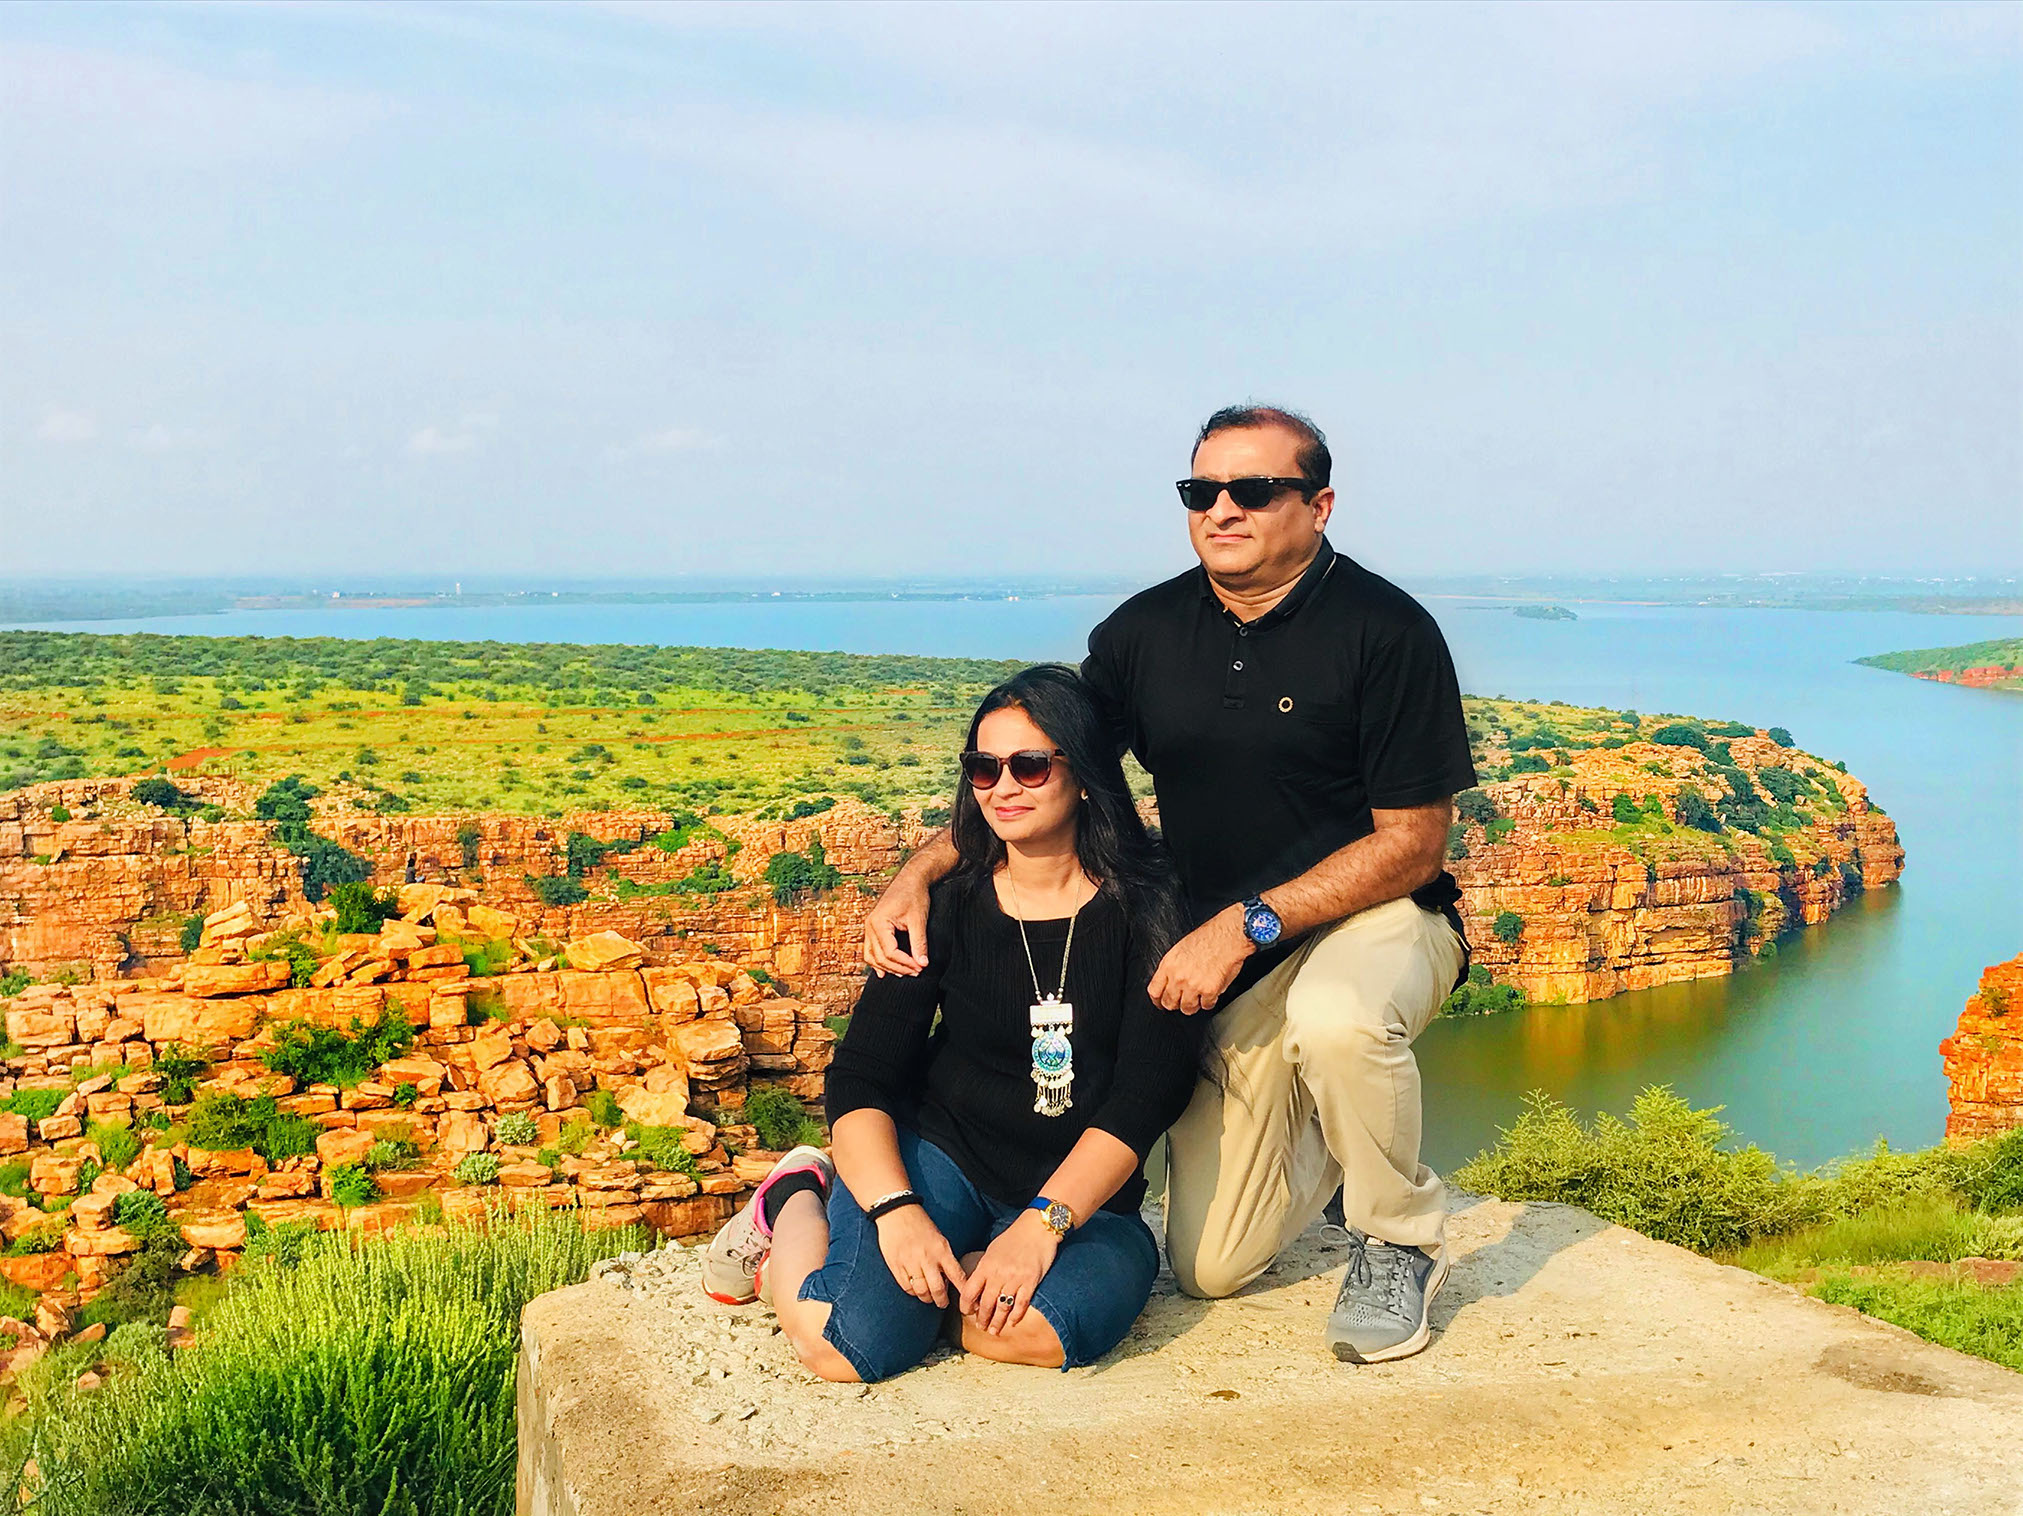 Rahuldev Rajguru and his wife enjoying the beautiful Gandikota canyon and Penna River.